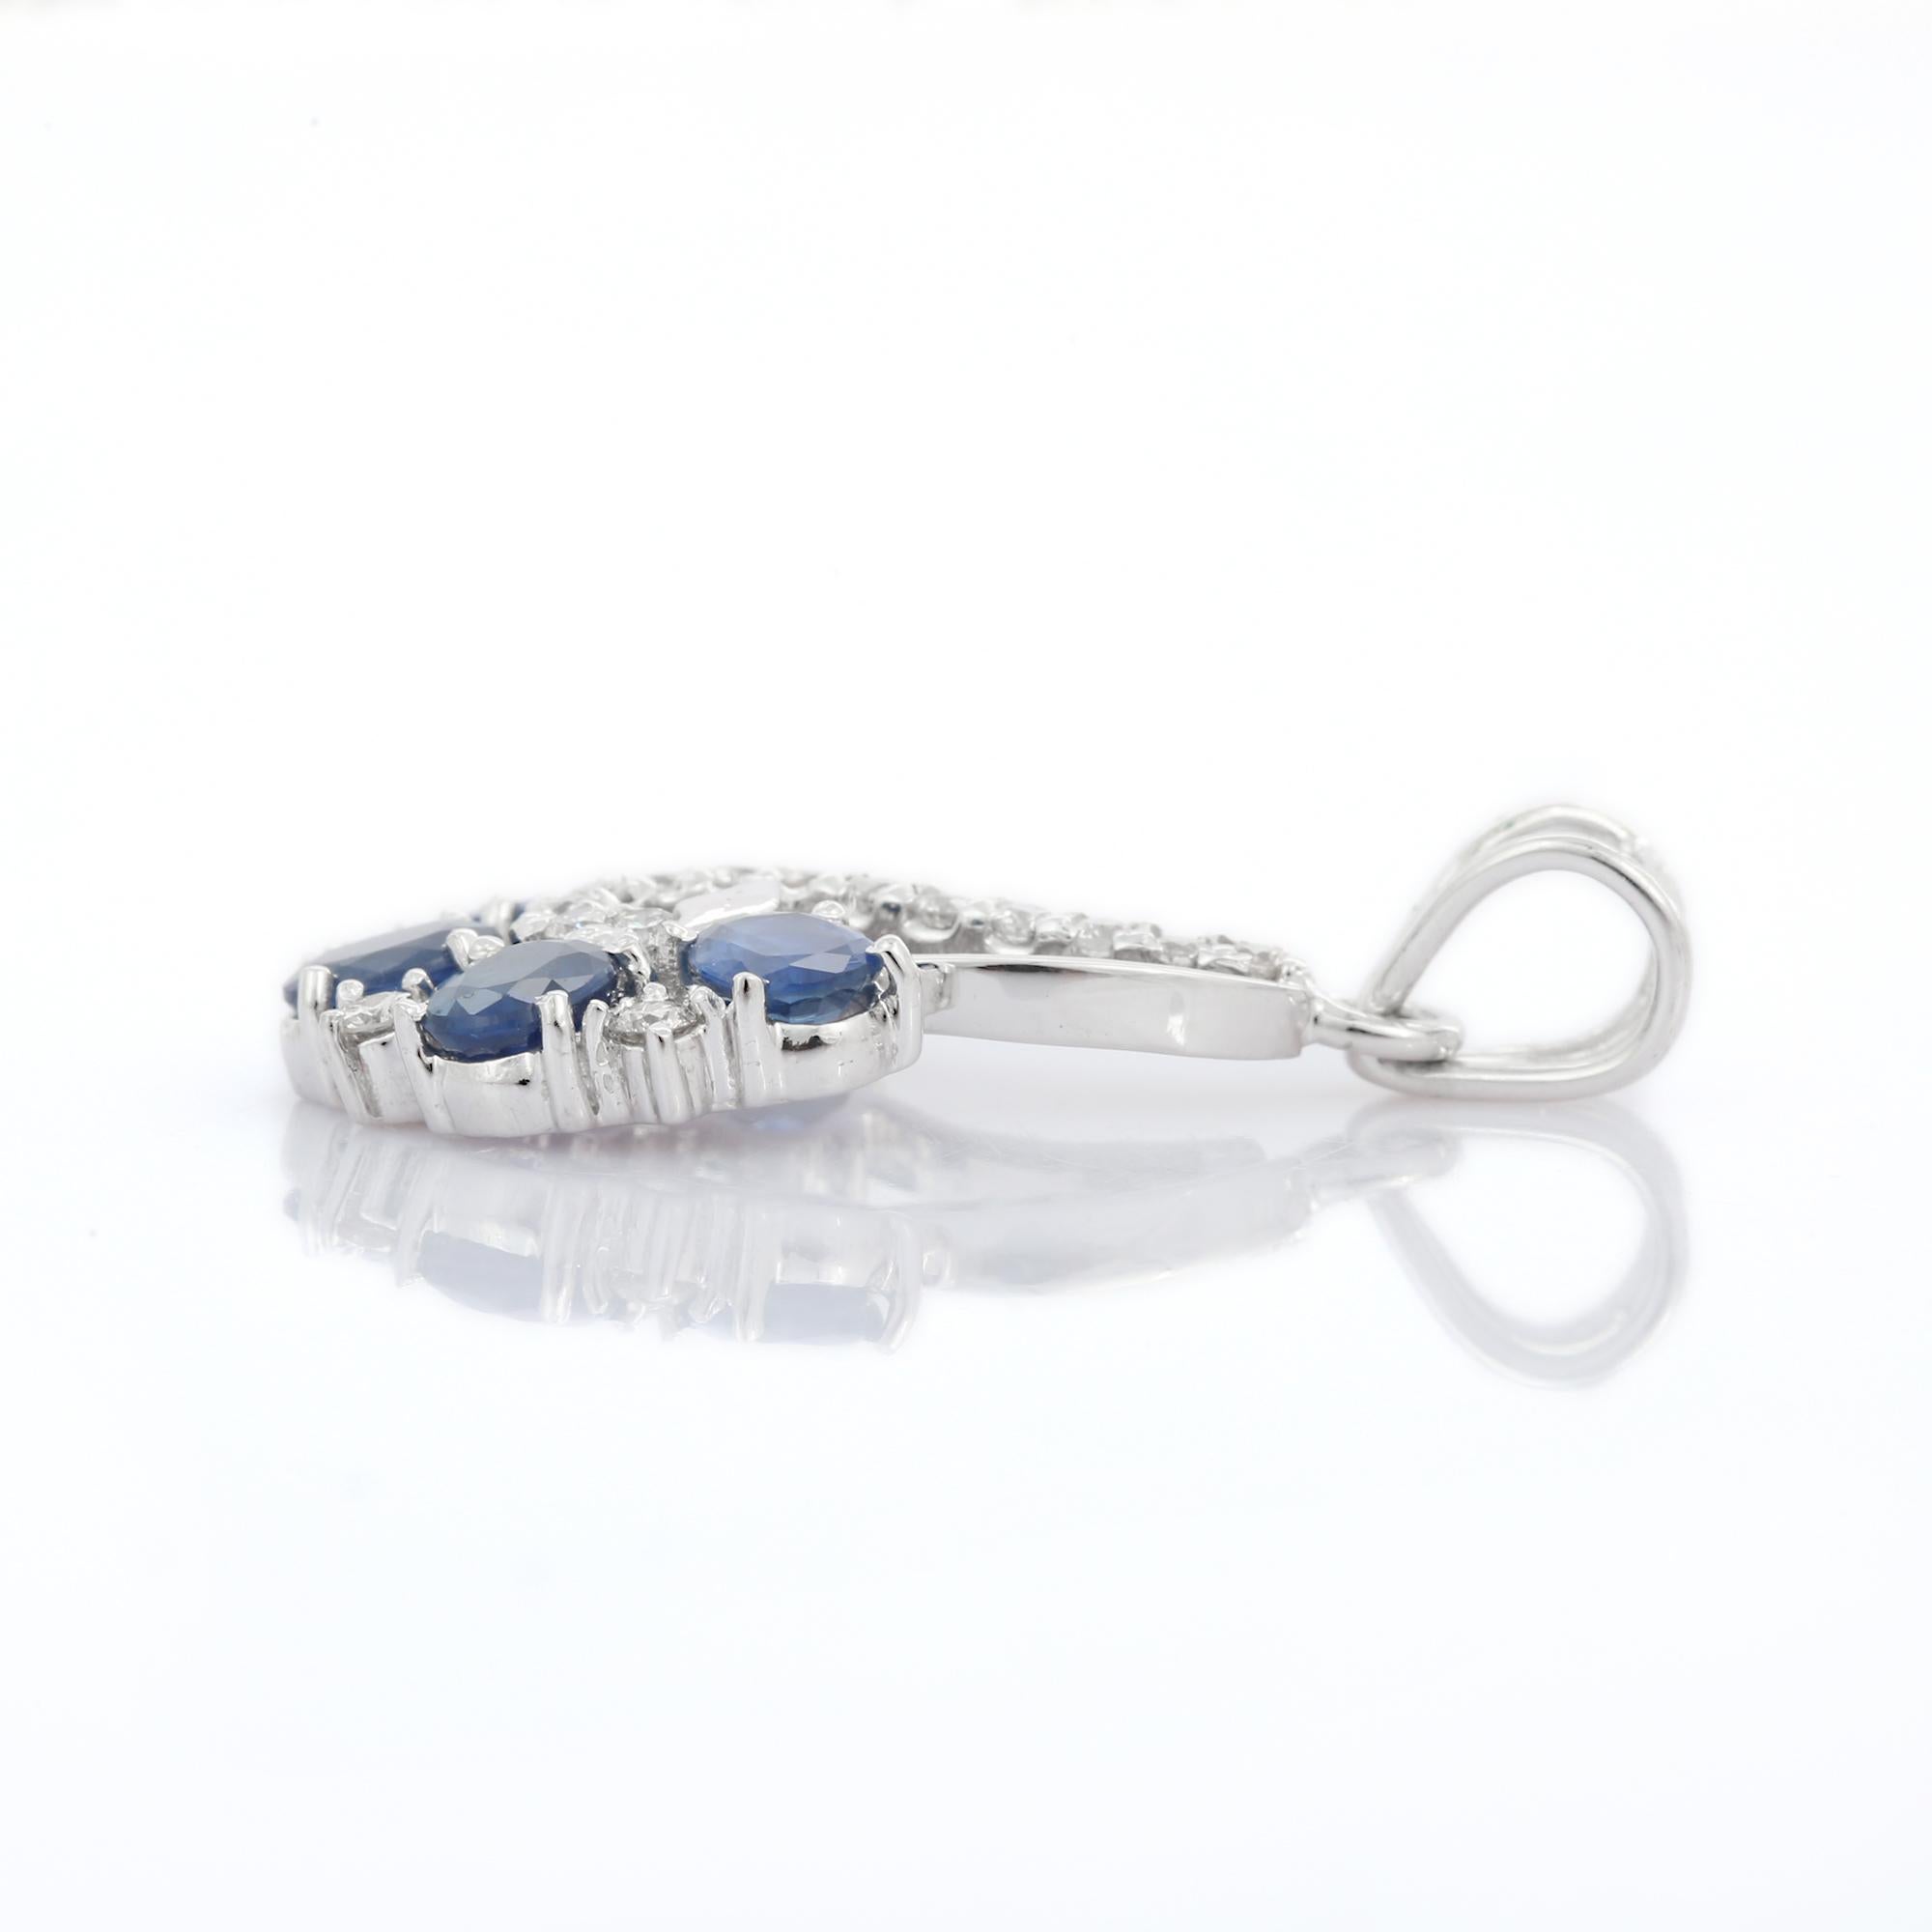 Oval Cut Art Nouveau 2.42 ct Blue Sapphire Diamond Pendant in 18K White Gold For Sale